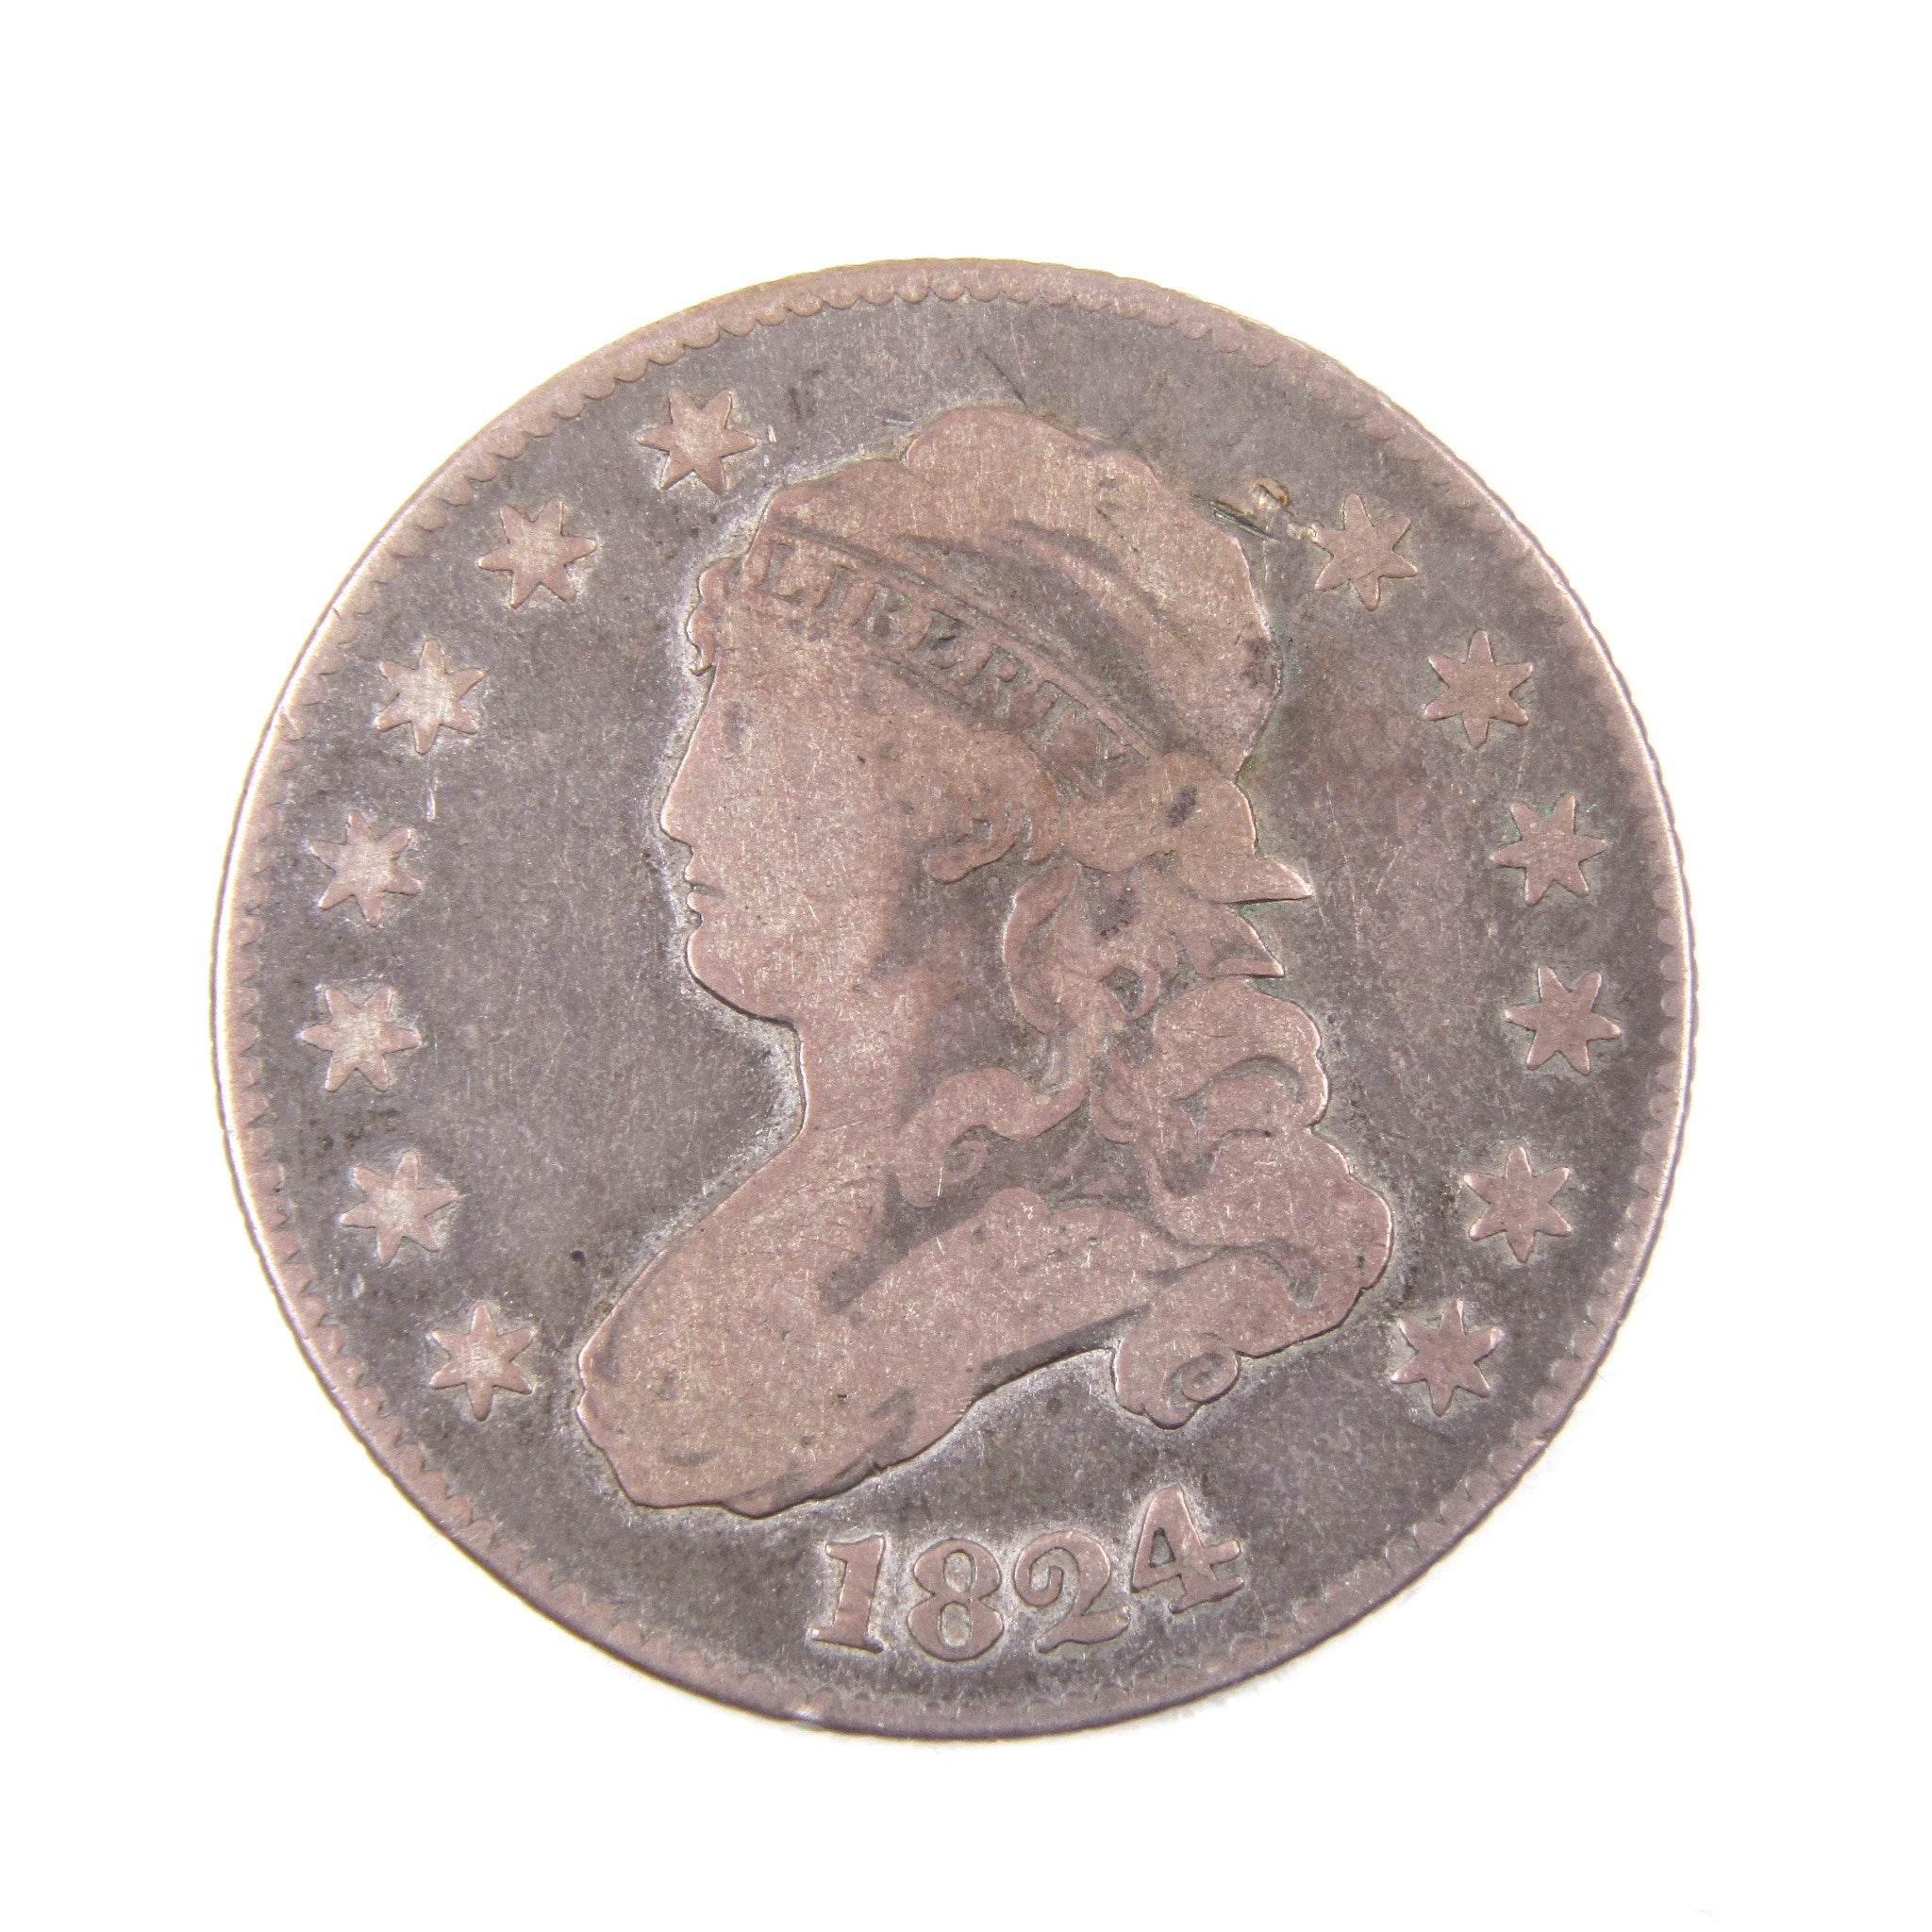 1824 Capped Bust Quarter VG Very Good 89.24% Silver 25c SKU:CPC1736